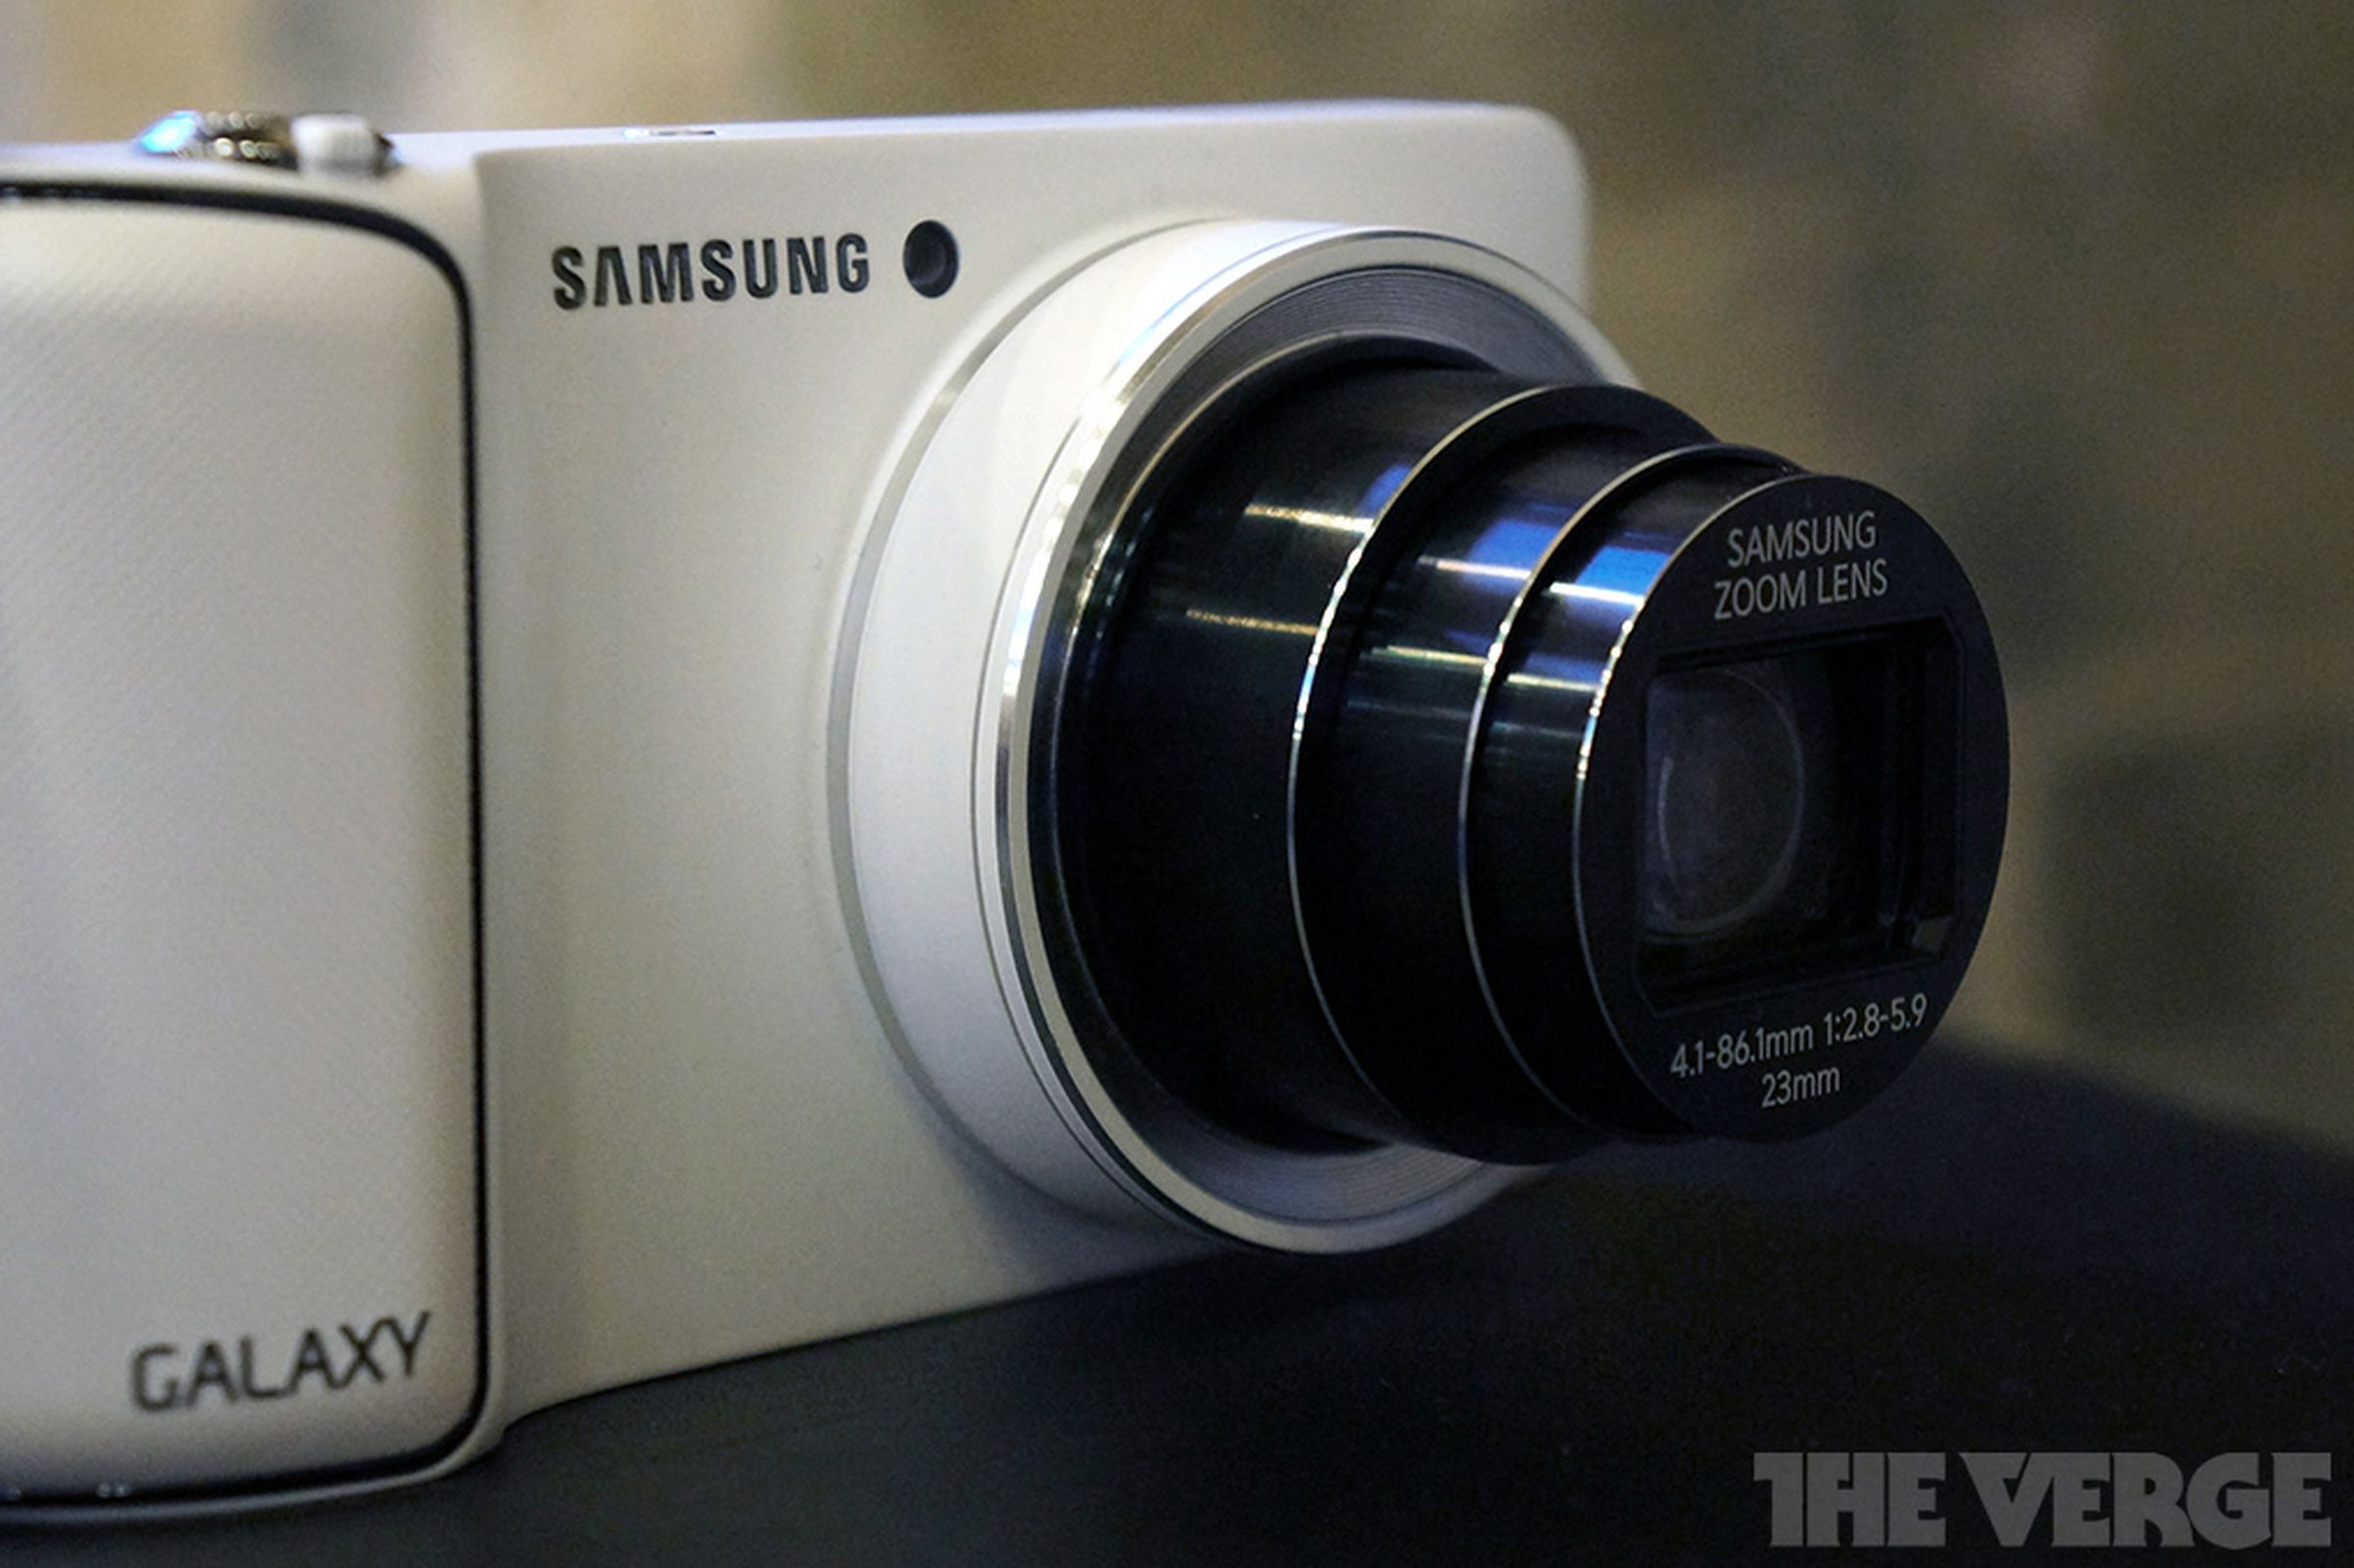 Samsung Galaxy Camera hardware